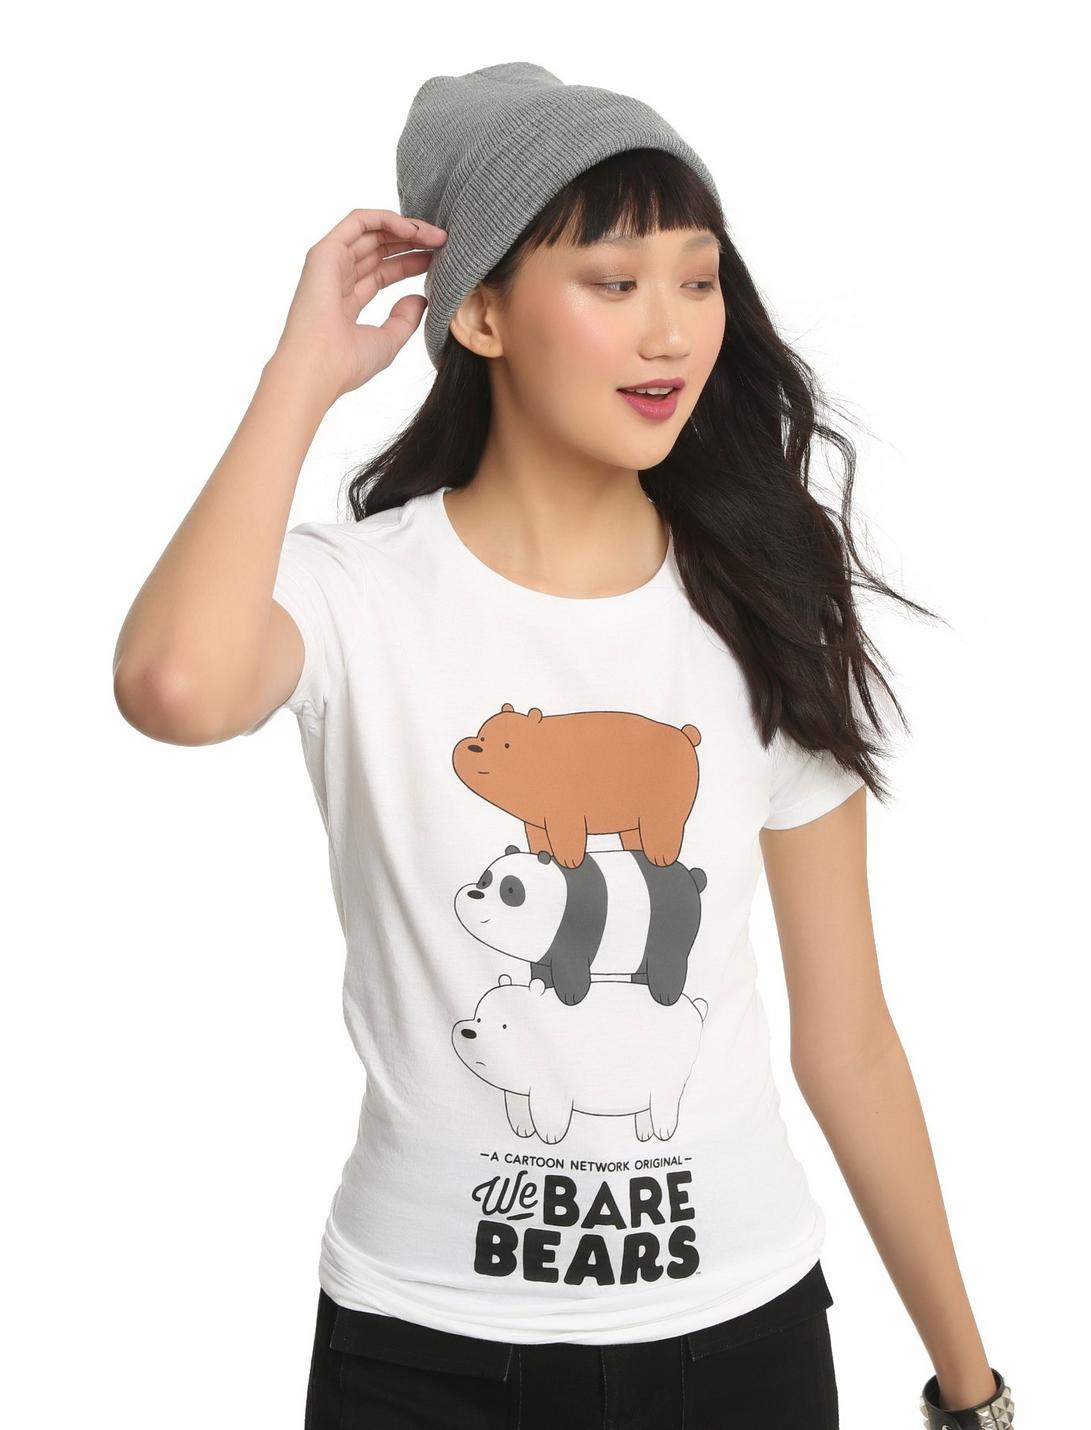 We Bare Bears Cartoon Network Girls T-Shirt, WHITE, hi-res